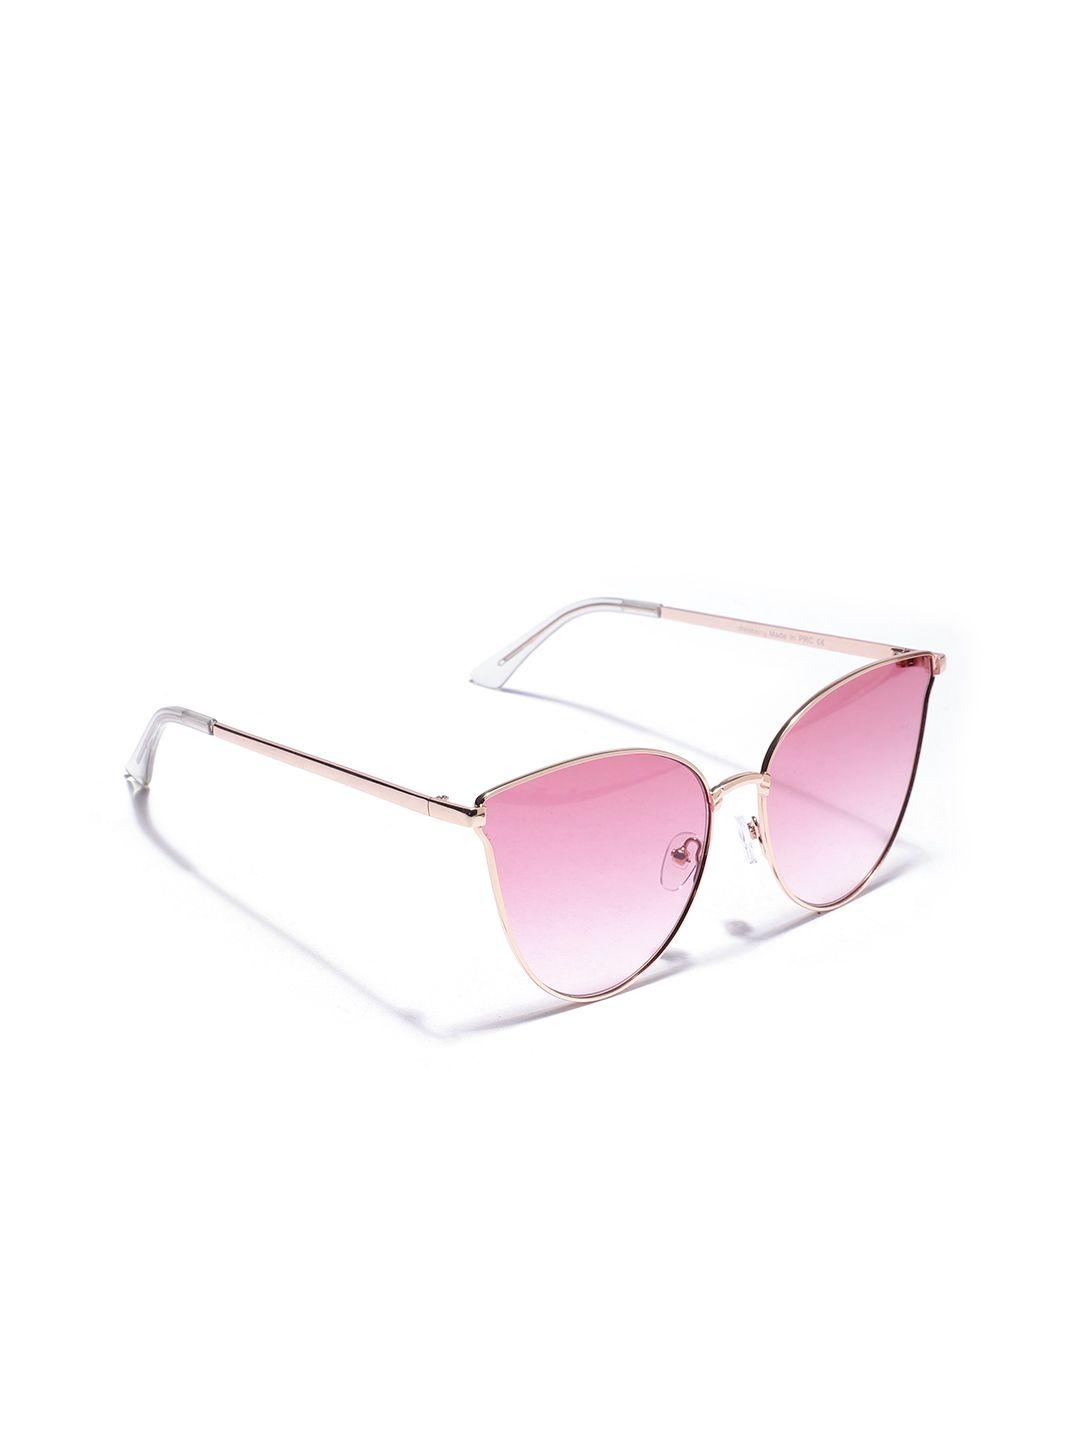 dressberry women cateye sunglasses